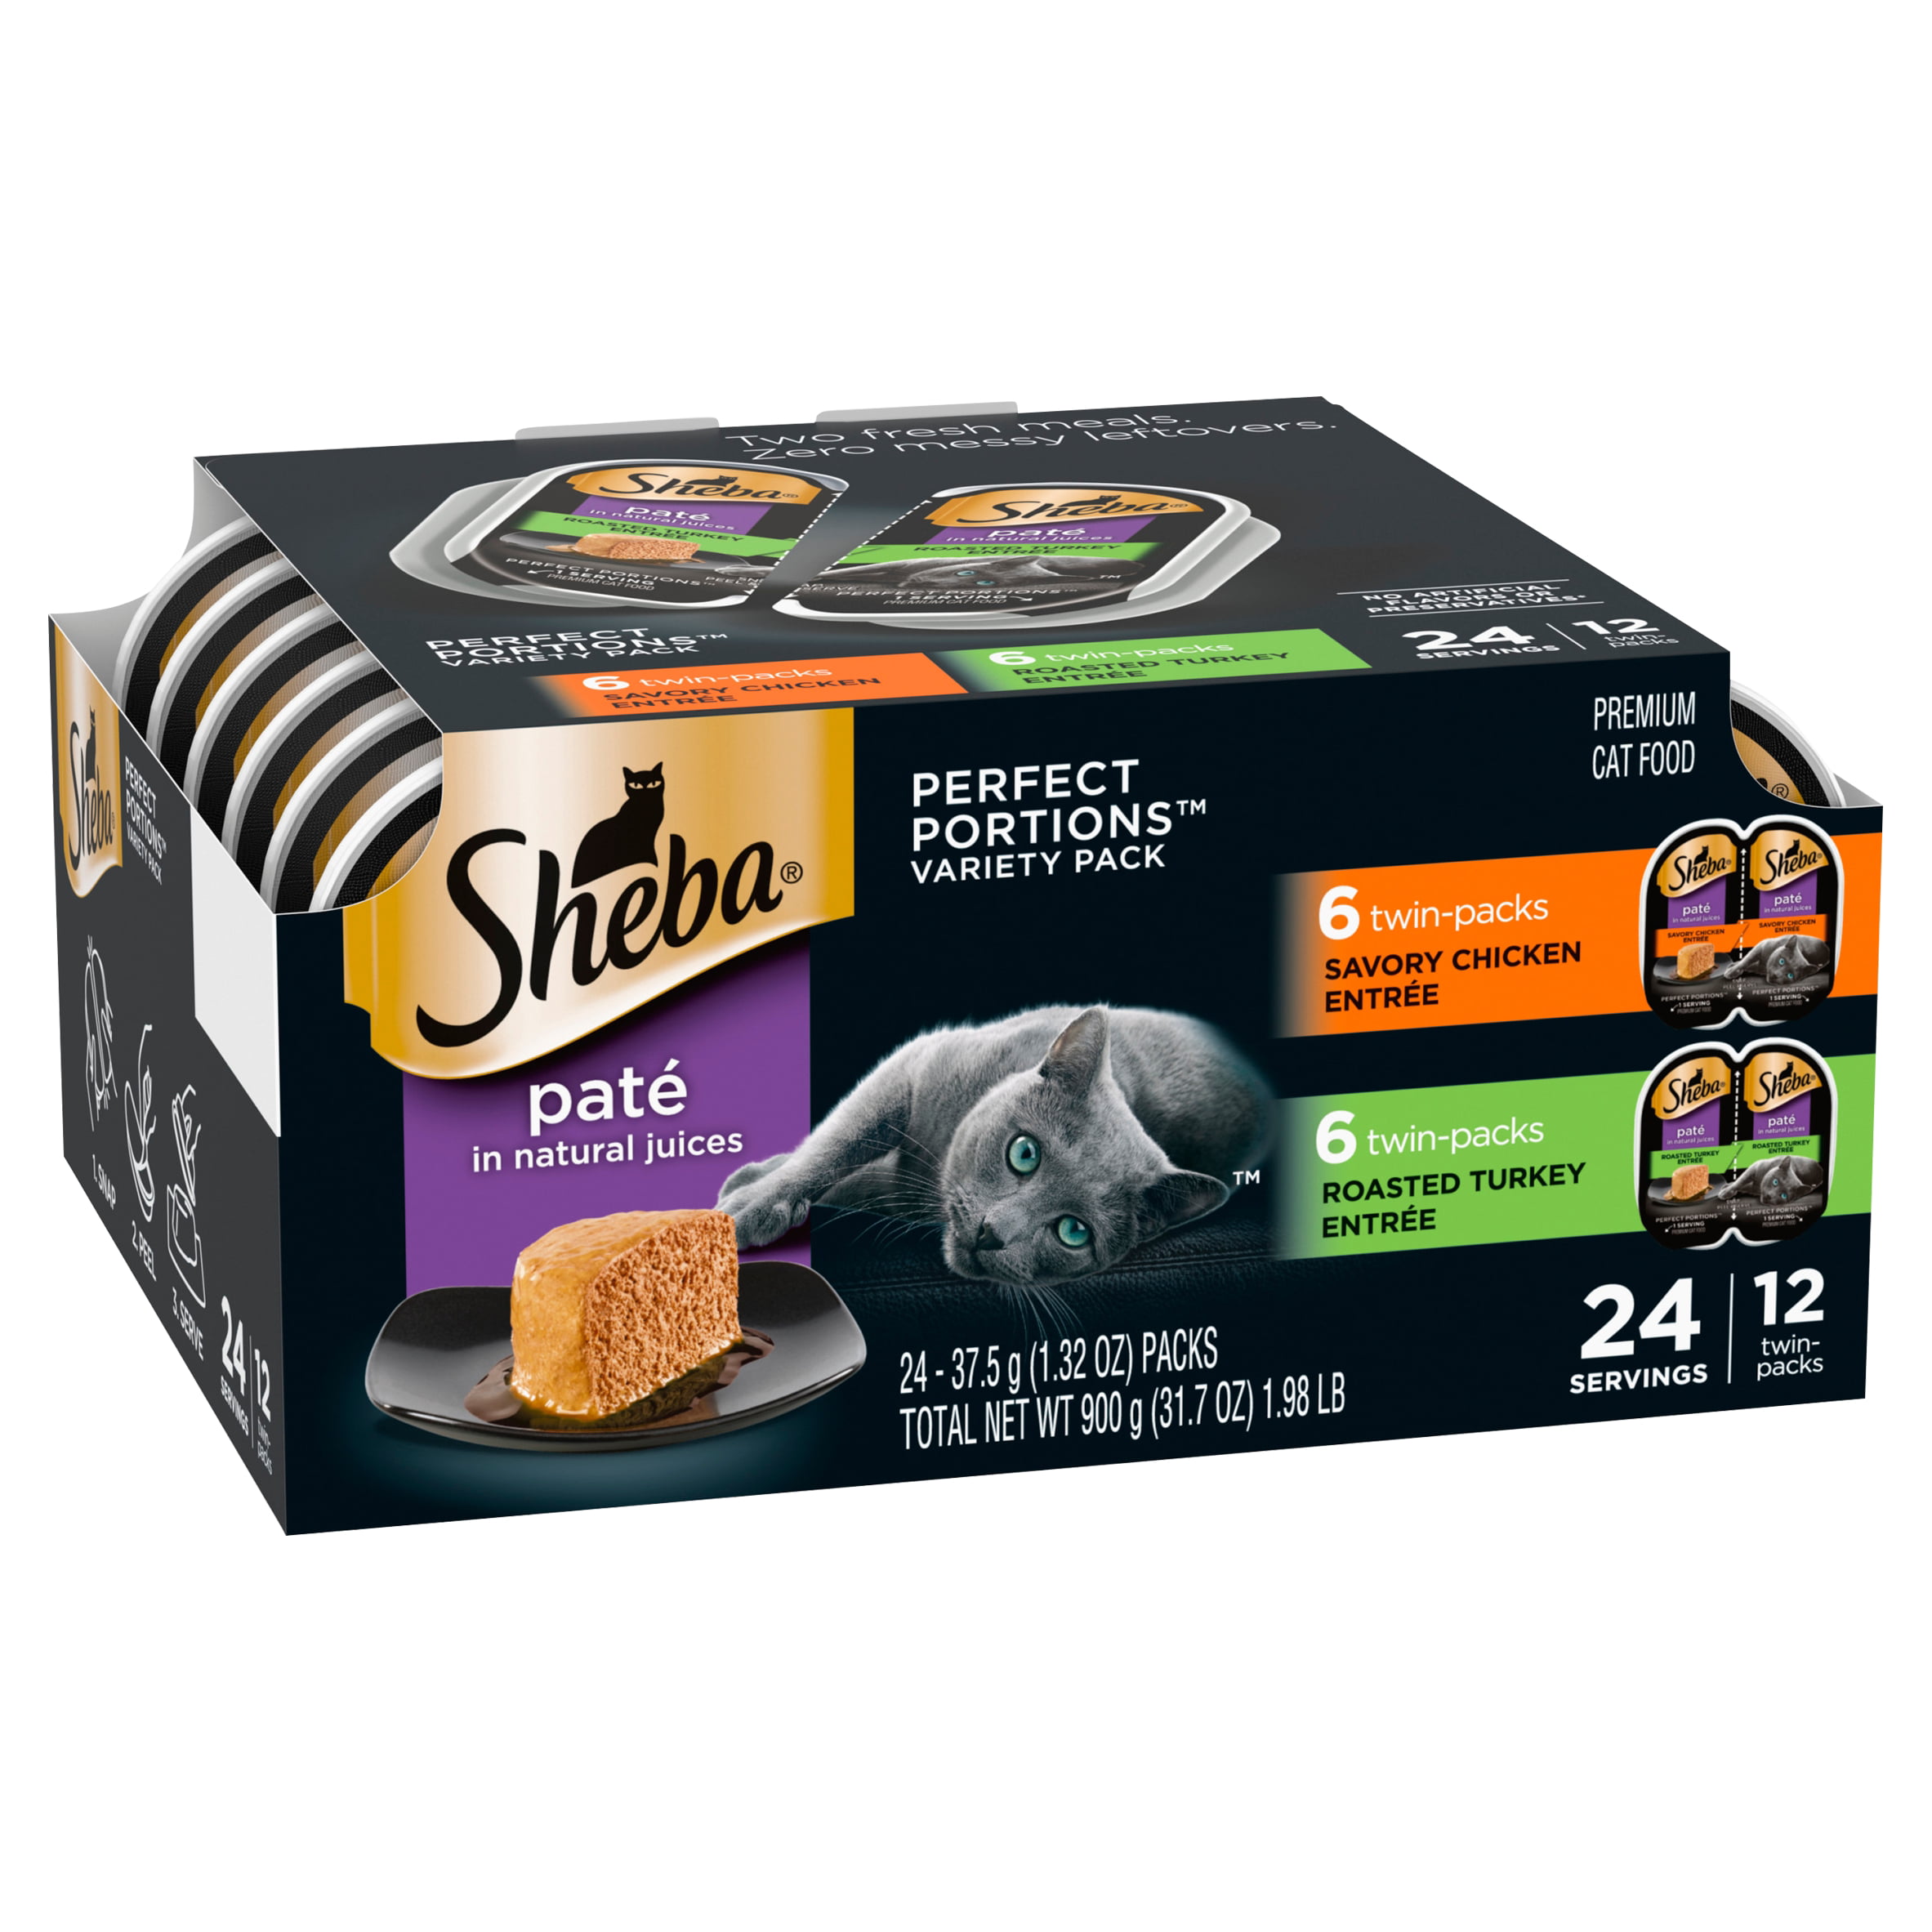 Sheba Paté in Natural Juices Premium Cat Food Variety Pack, 1.32 oz, 24